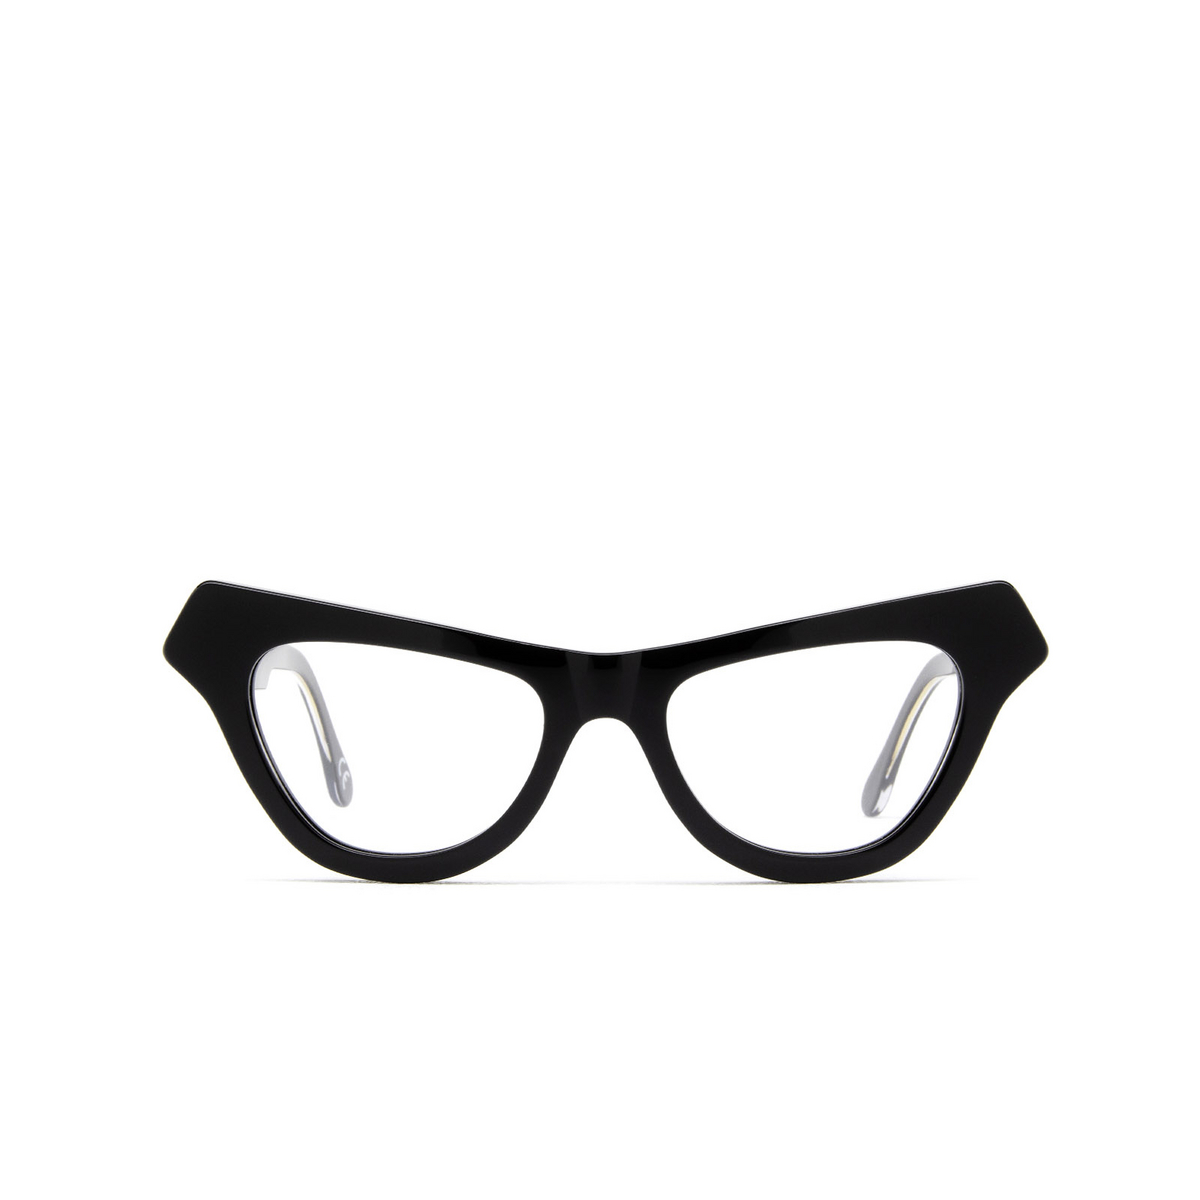 Marni® Irregular Eyeglasses: Jeju Island color Black Ctq - front view.